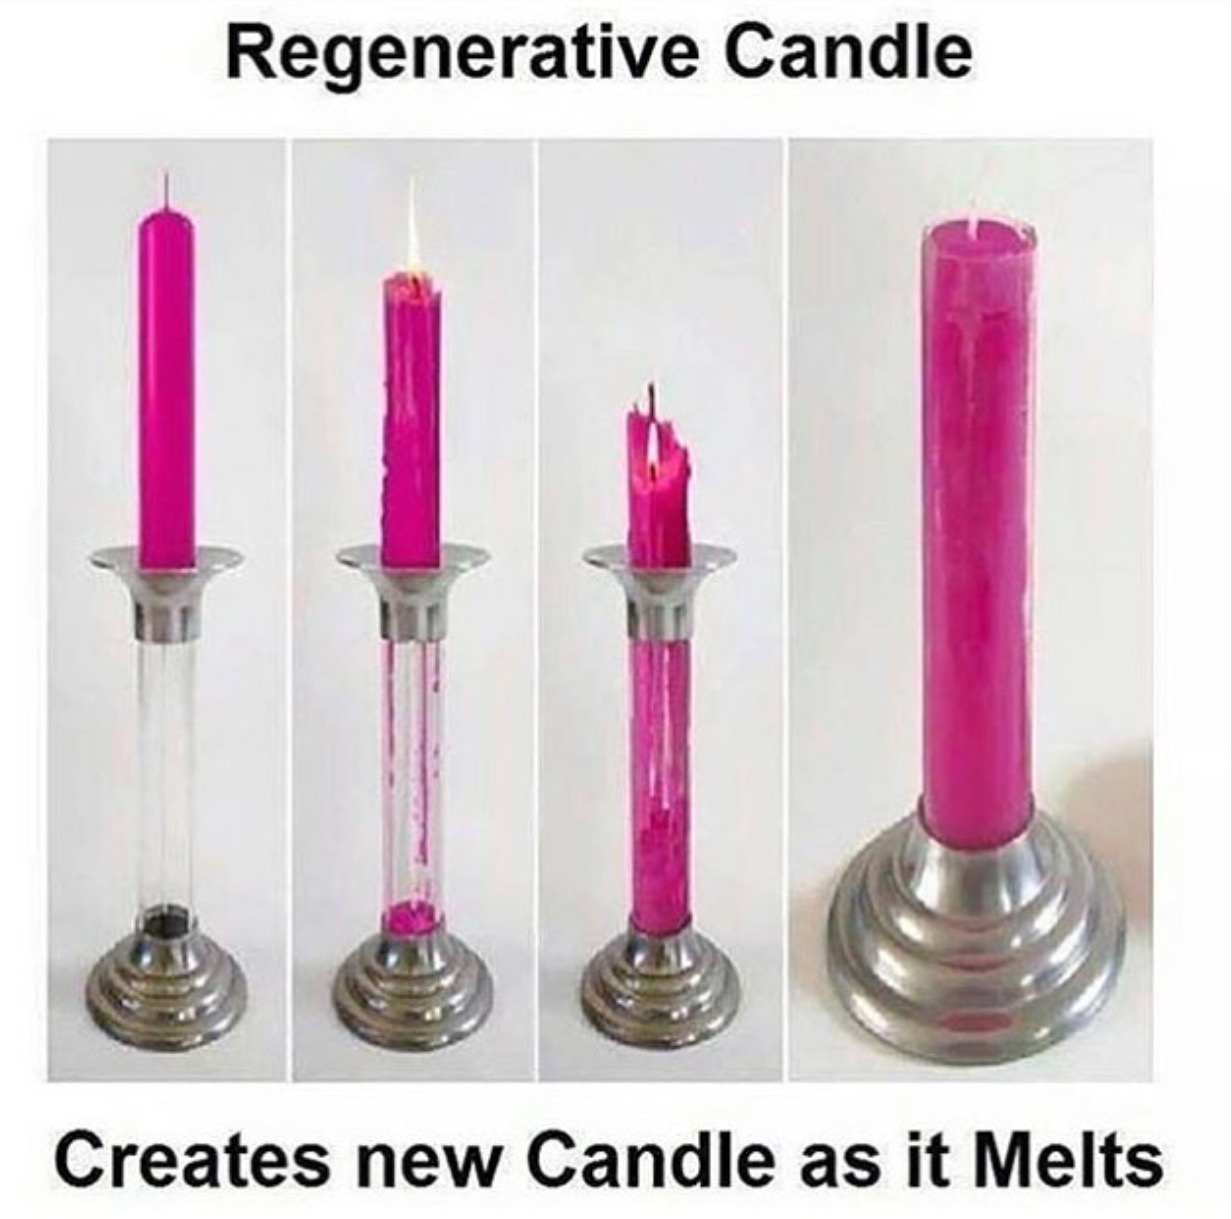 regenerative candle - Regenerative Candle Creates new Candle as it Melts